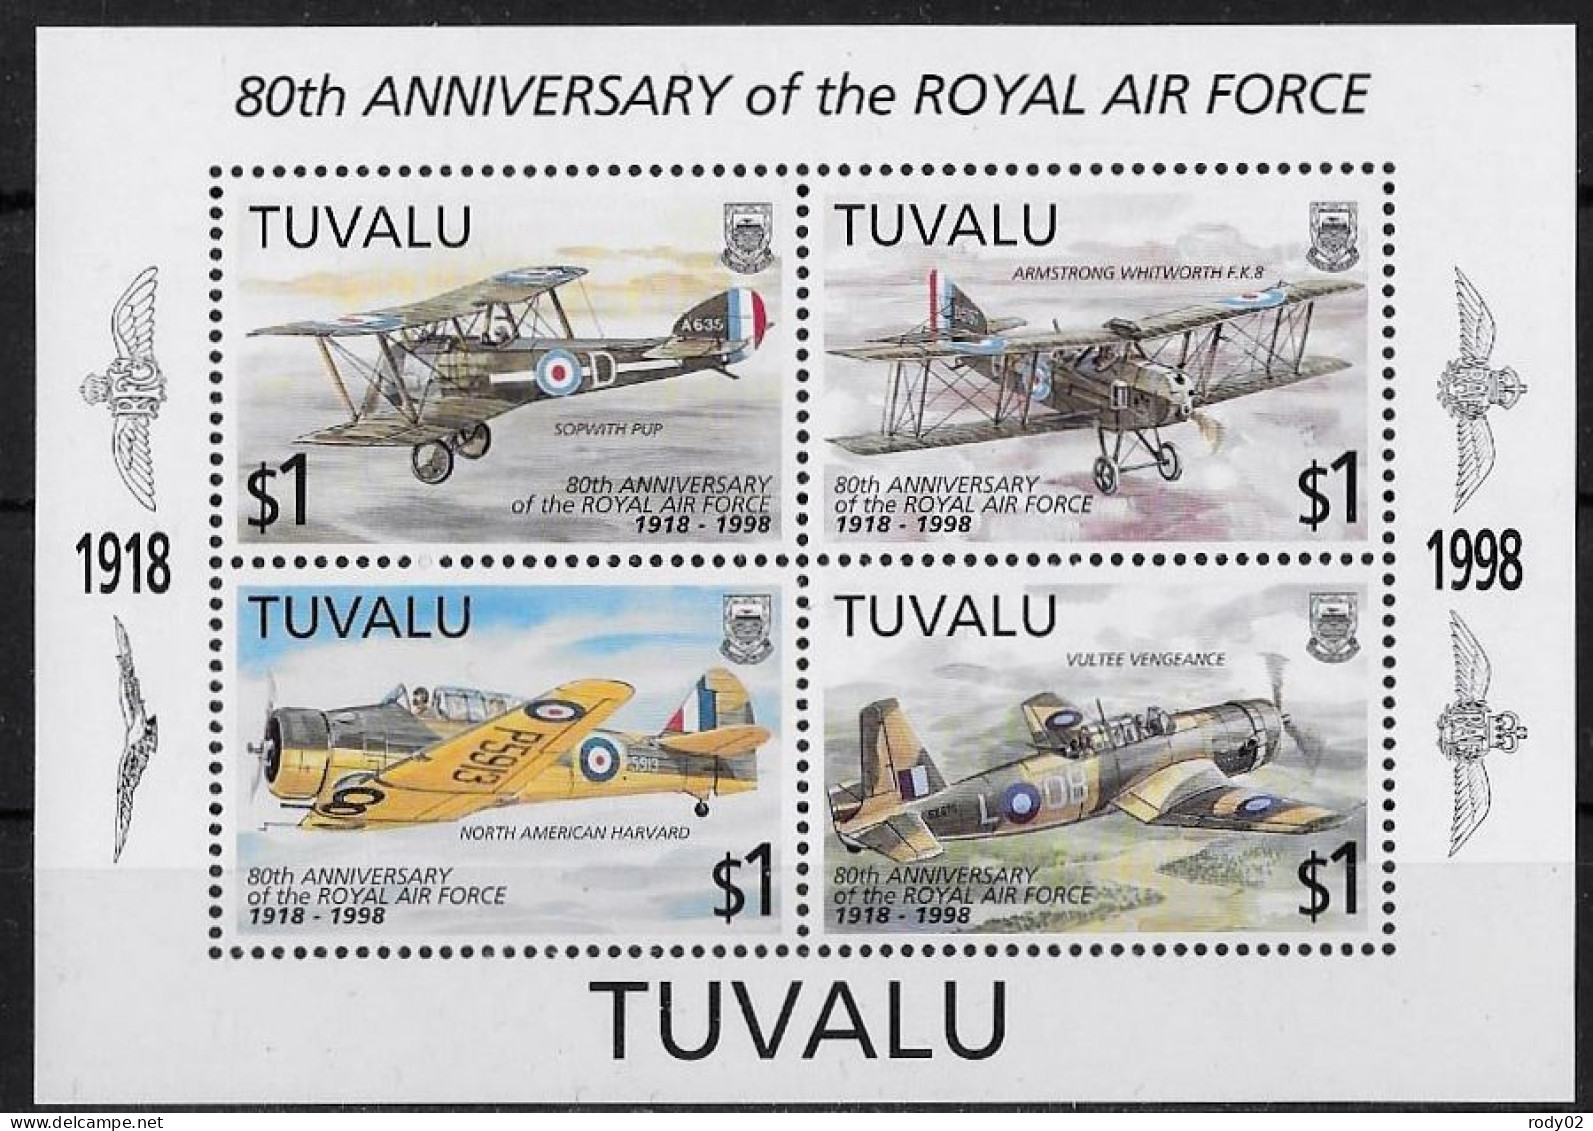 TUVALU - AVIATION - BF 62 - NEUF** MNH - Avions